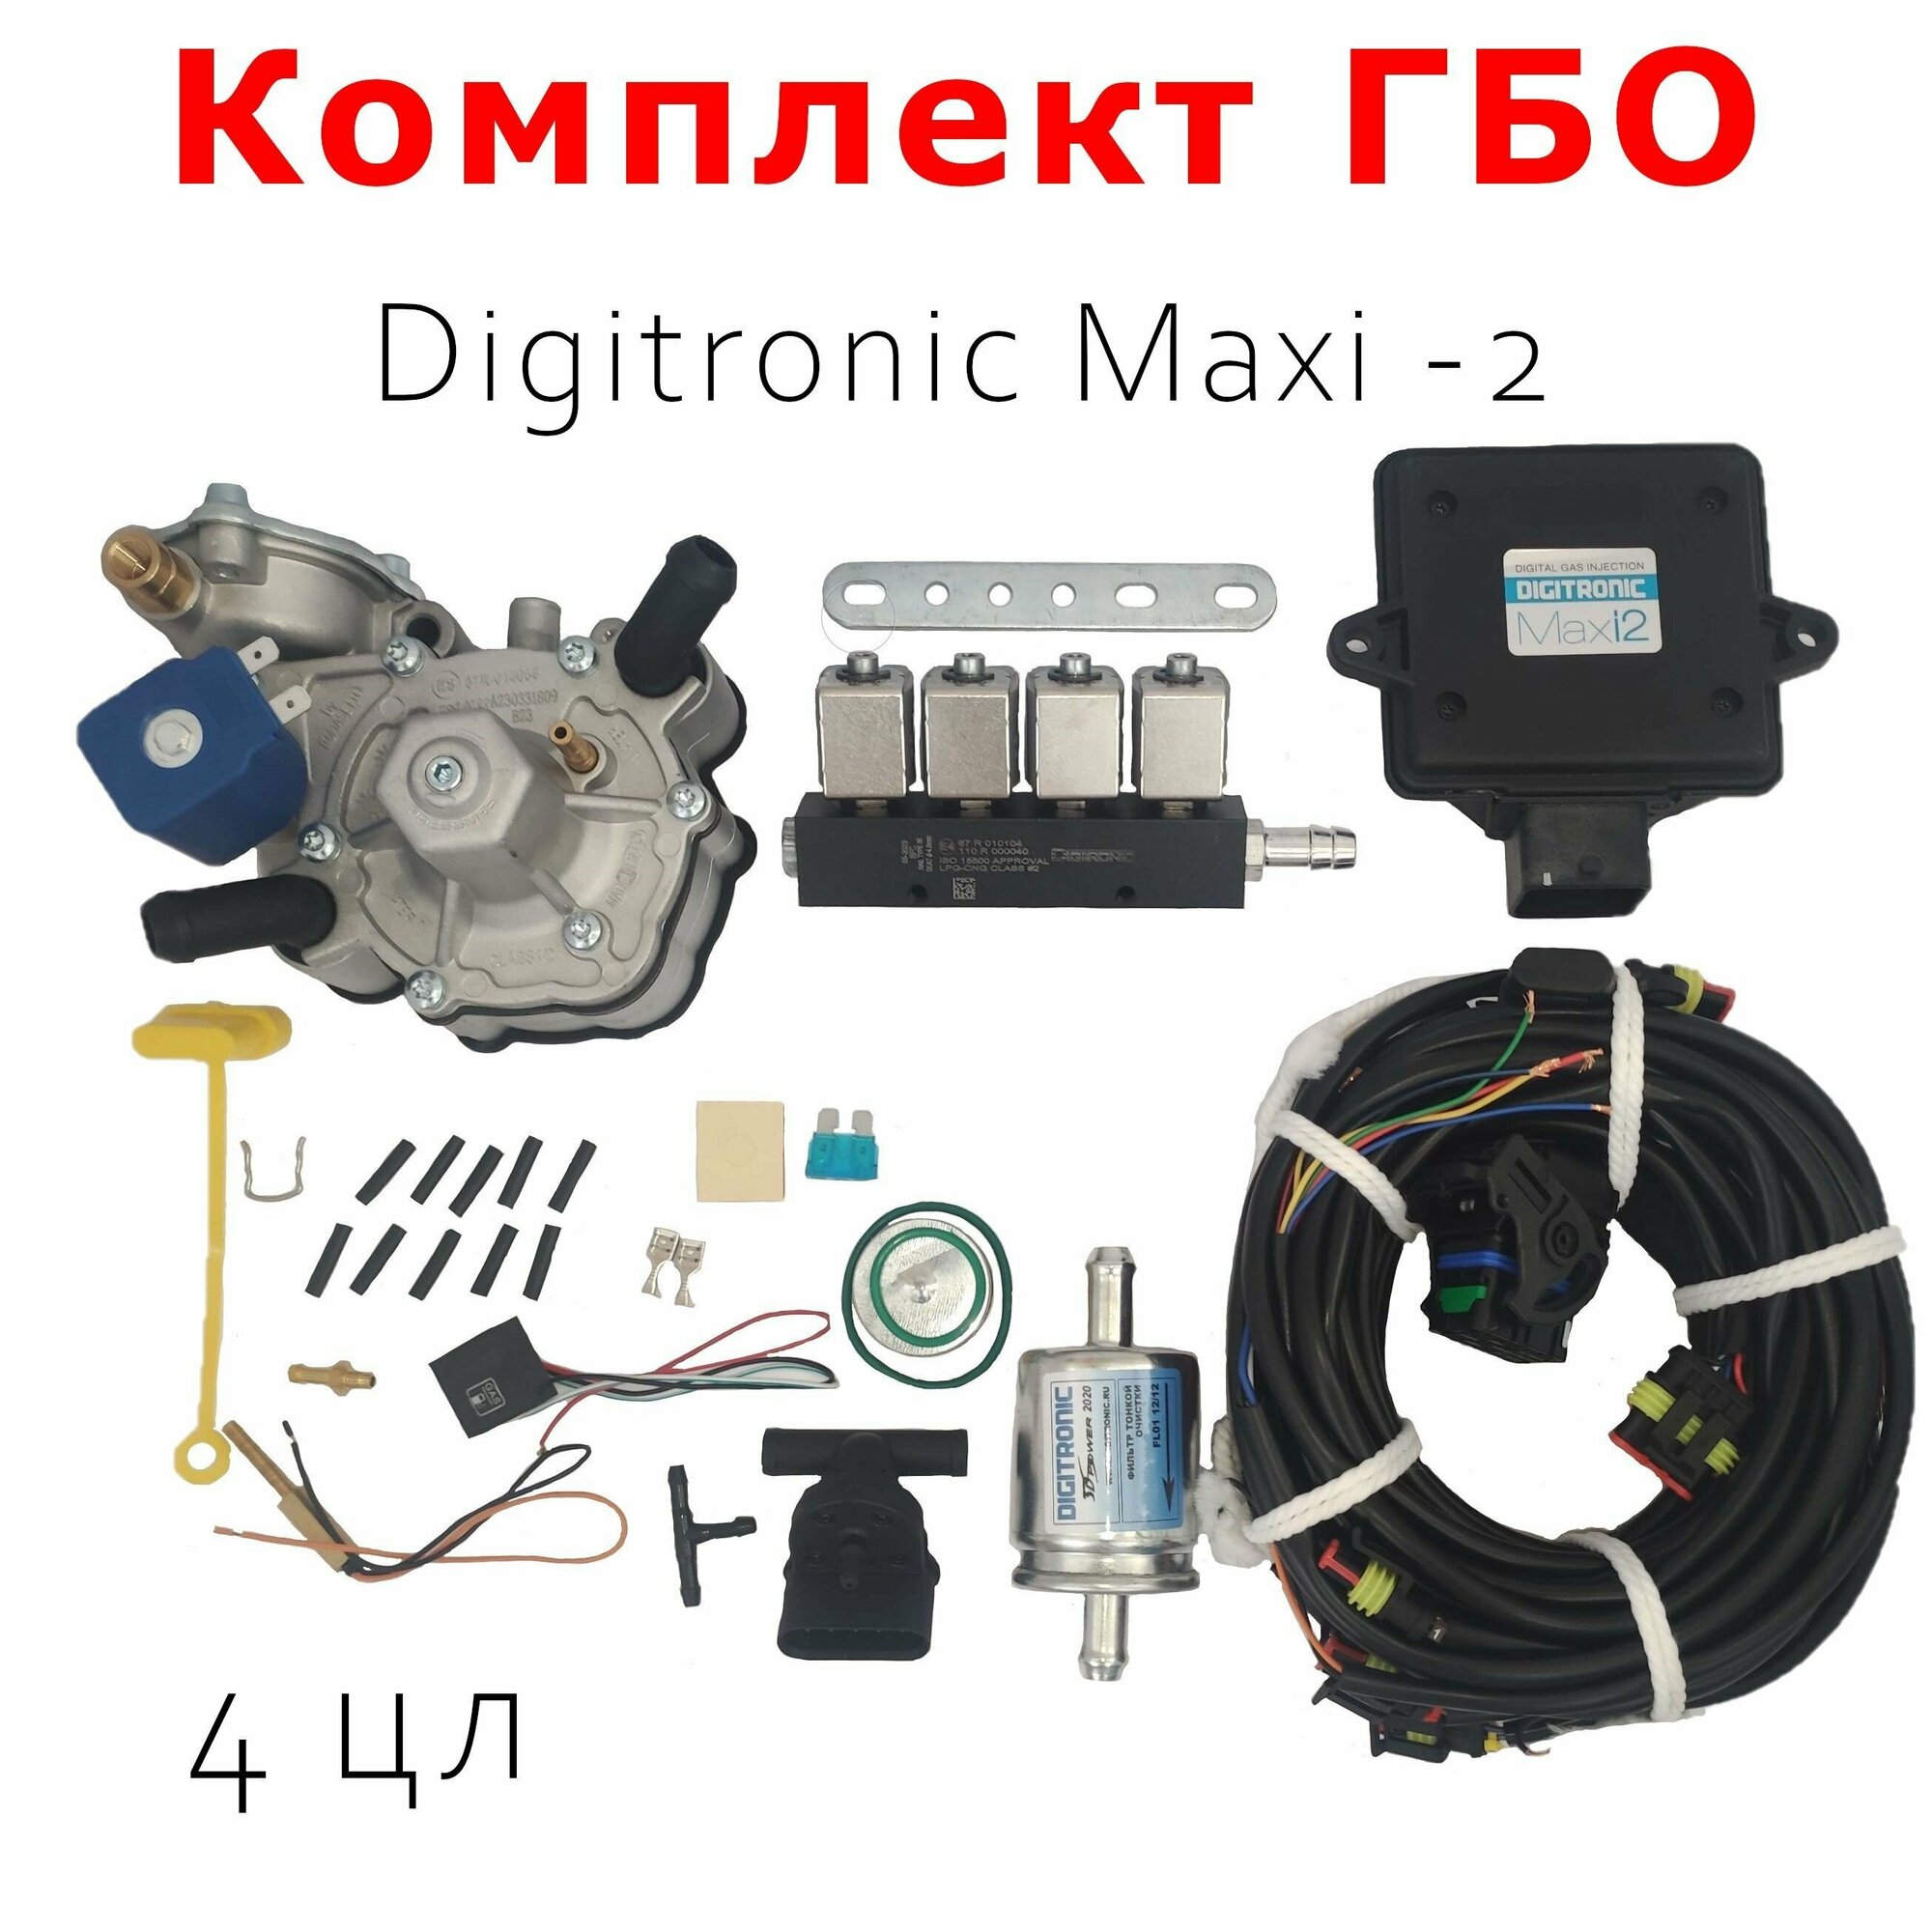 Комплект ГБО (мини-кит) Digitronic Maxi-2 4 цилиндра(Редуктор + Форсунки) - Подкапотная часть